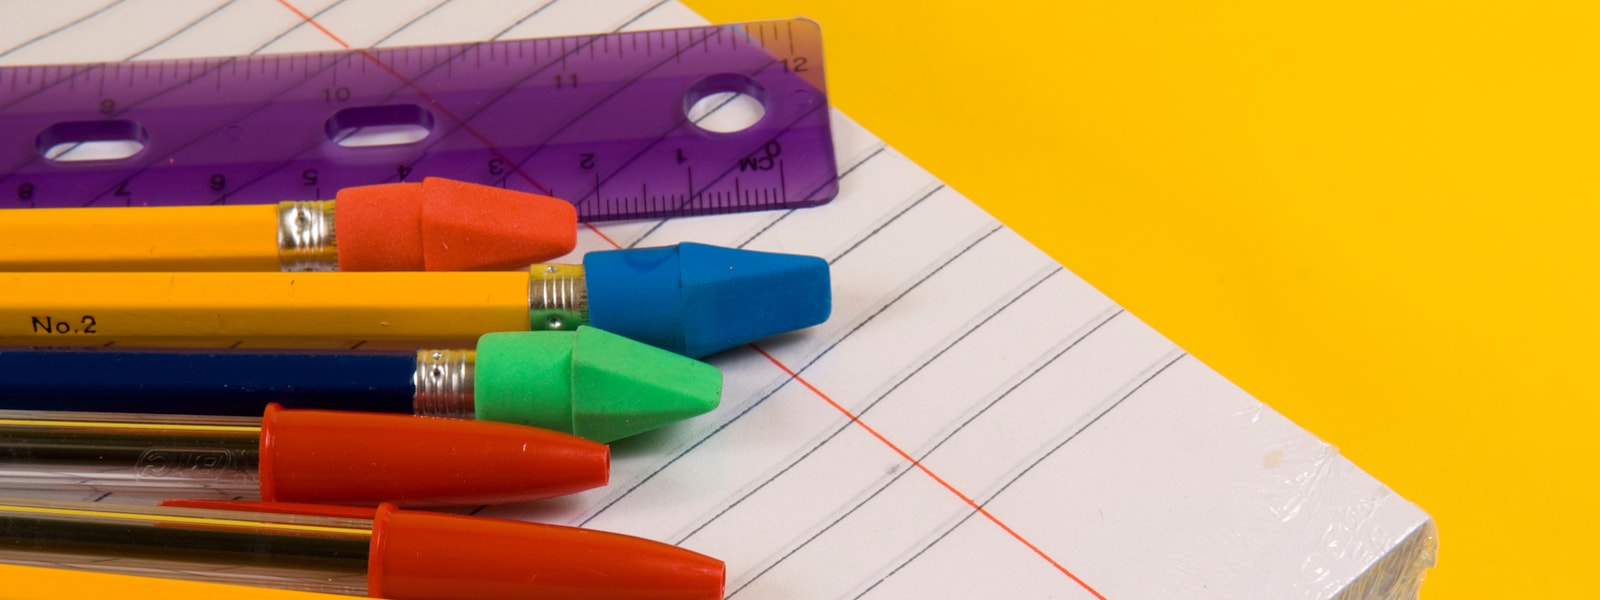 pens, pencils, ruler, and paper